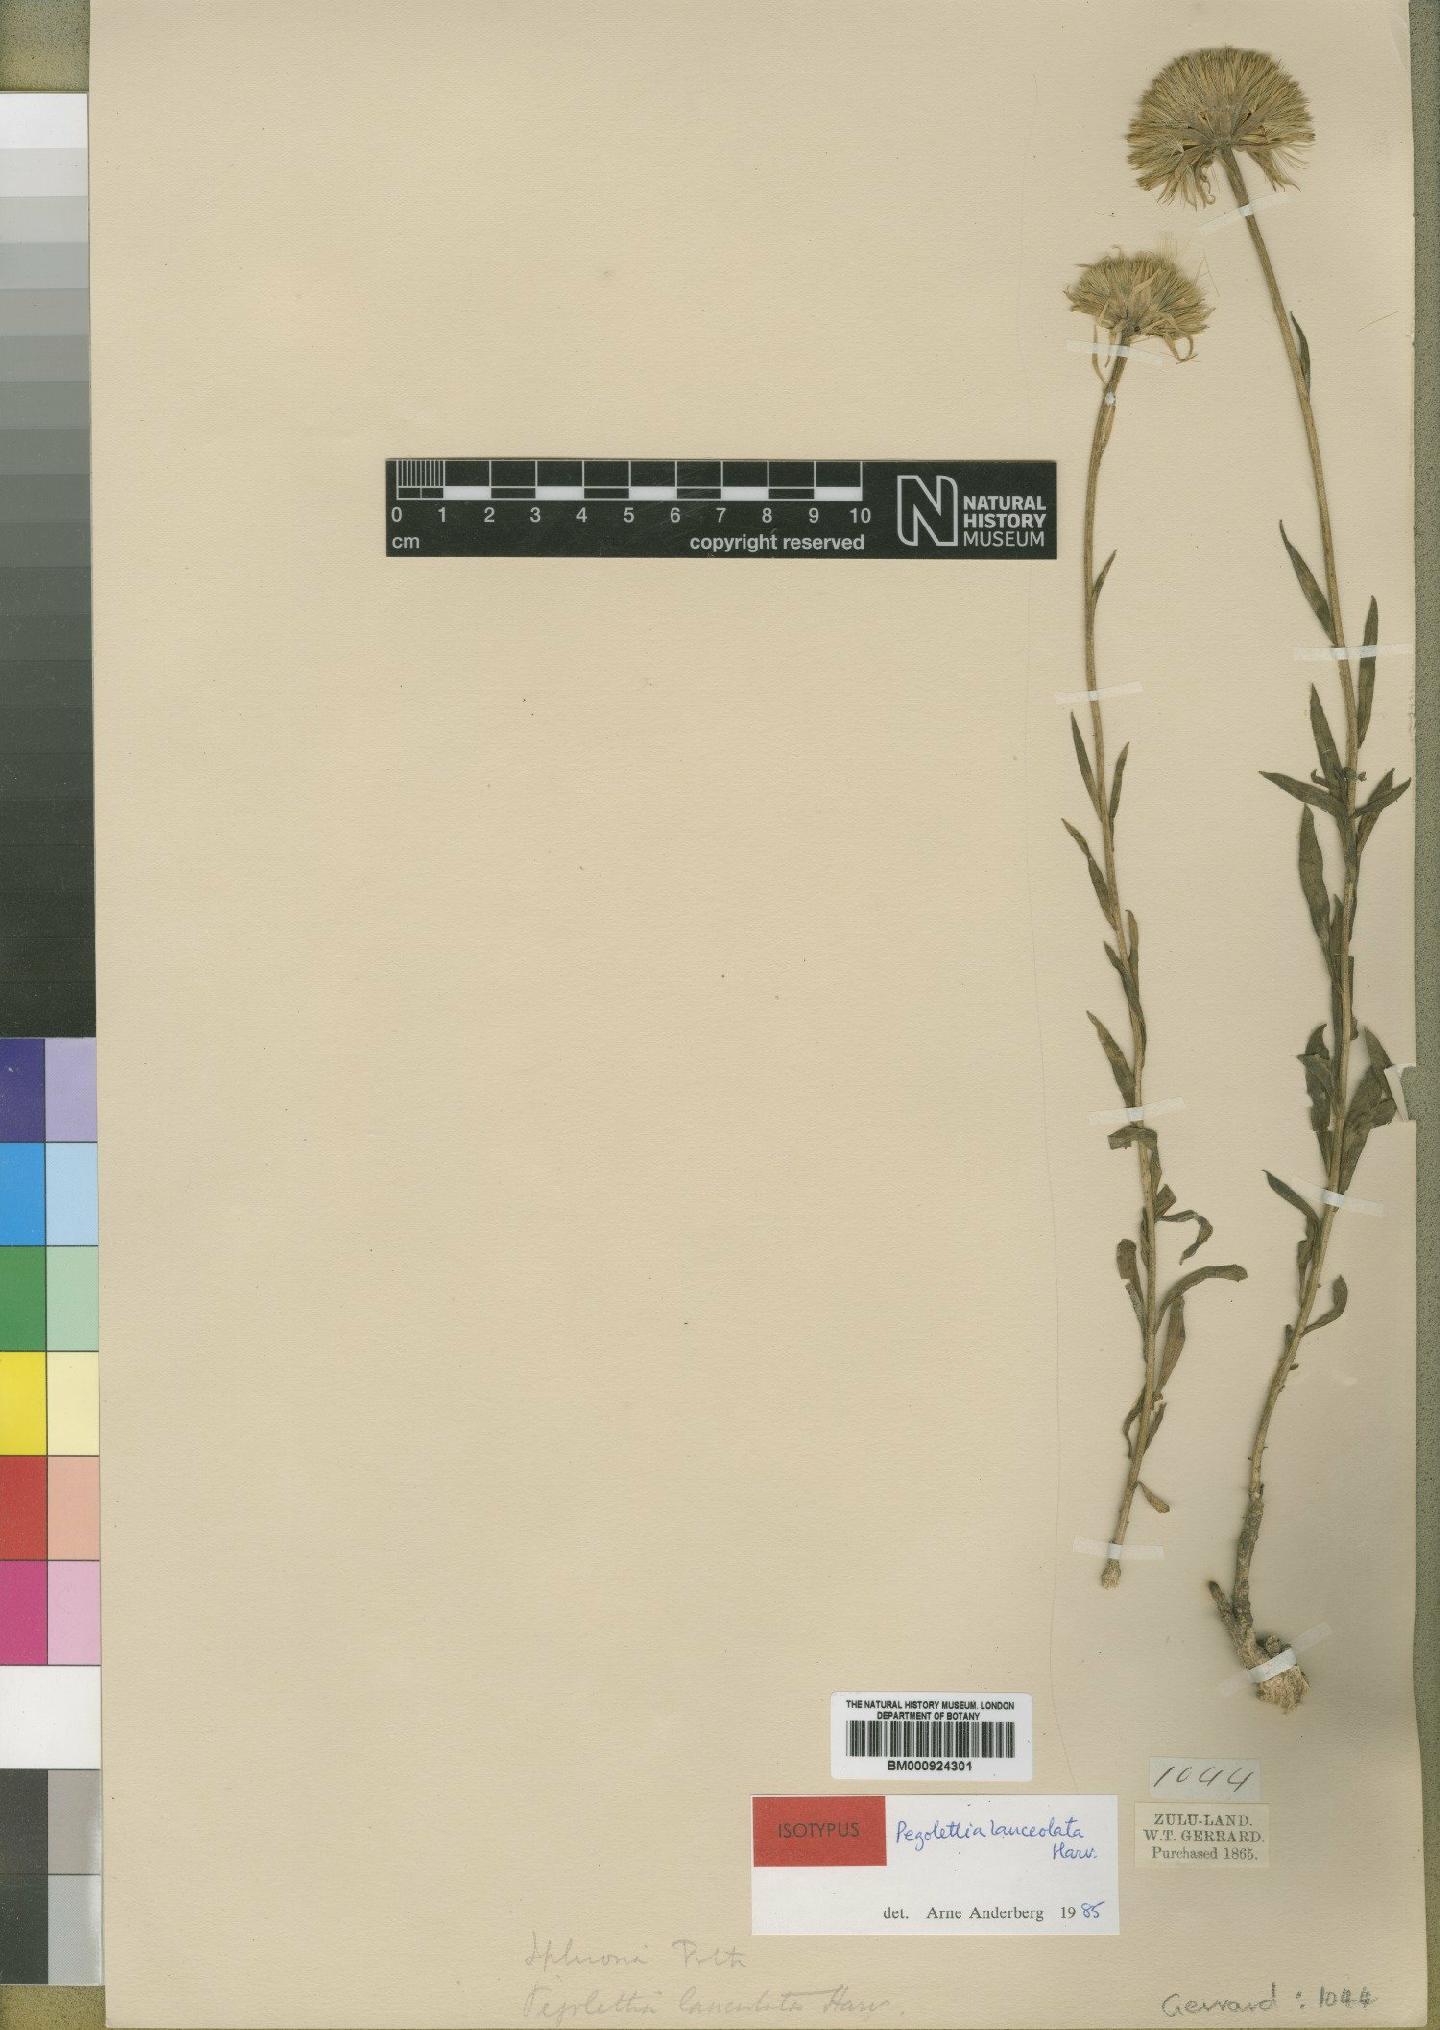 To NHMUK collection (Pegolettia lanceolata Harv.; Isotype; NHMUK:ecatalogue:4529329)